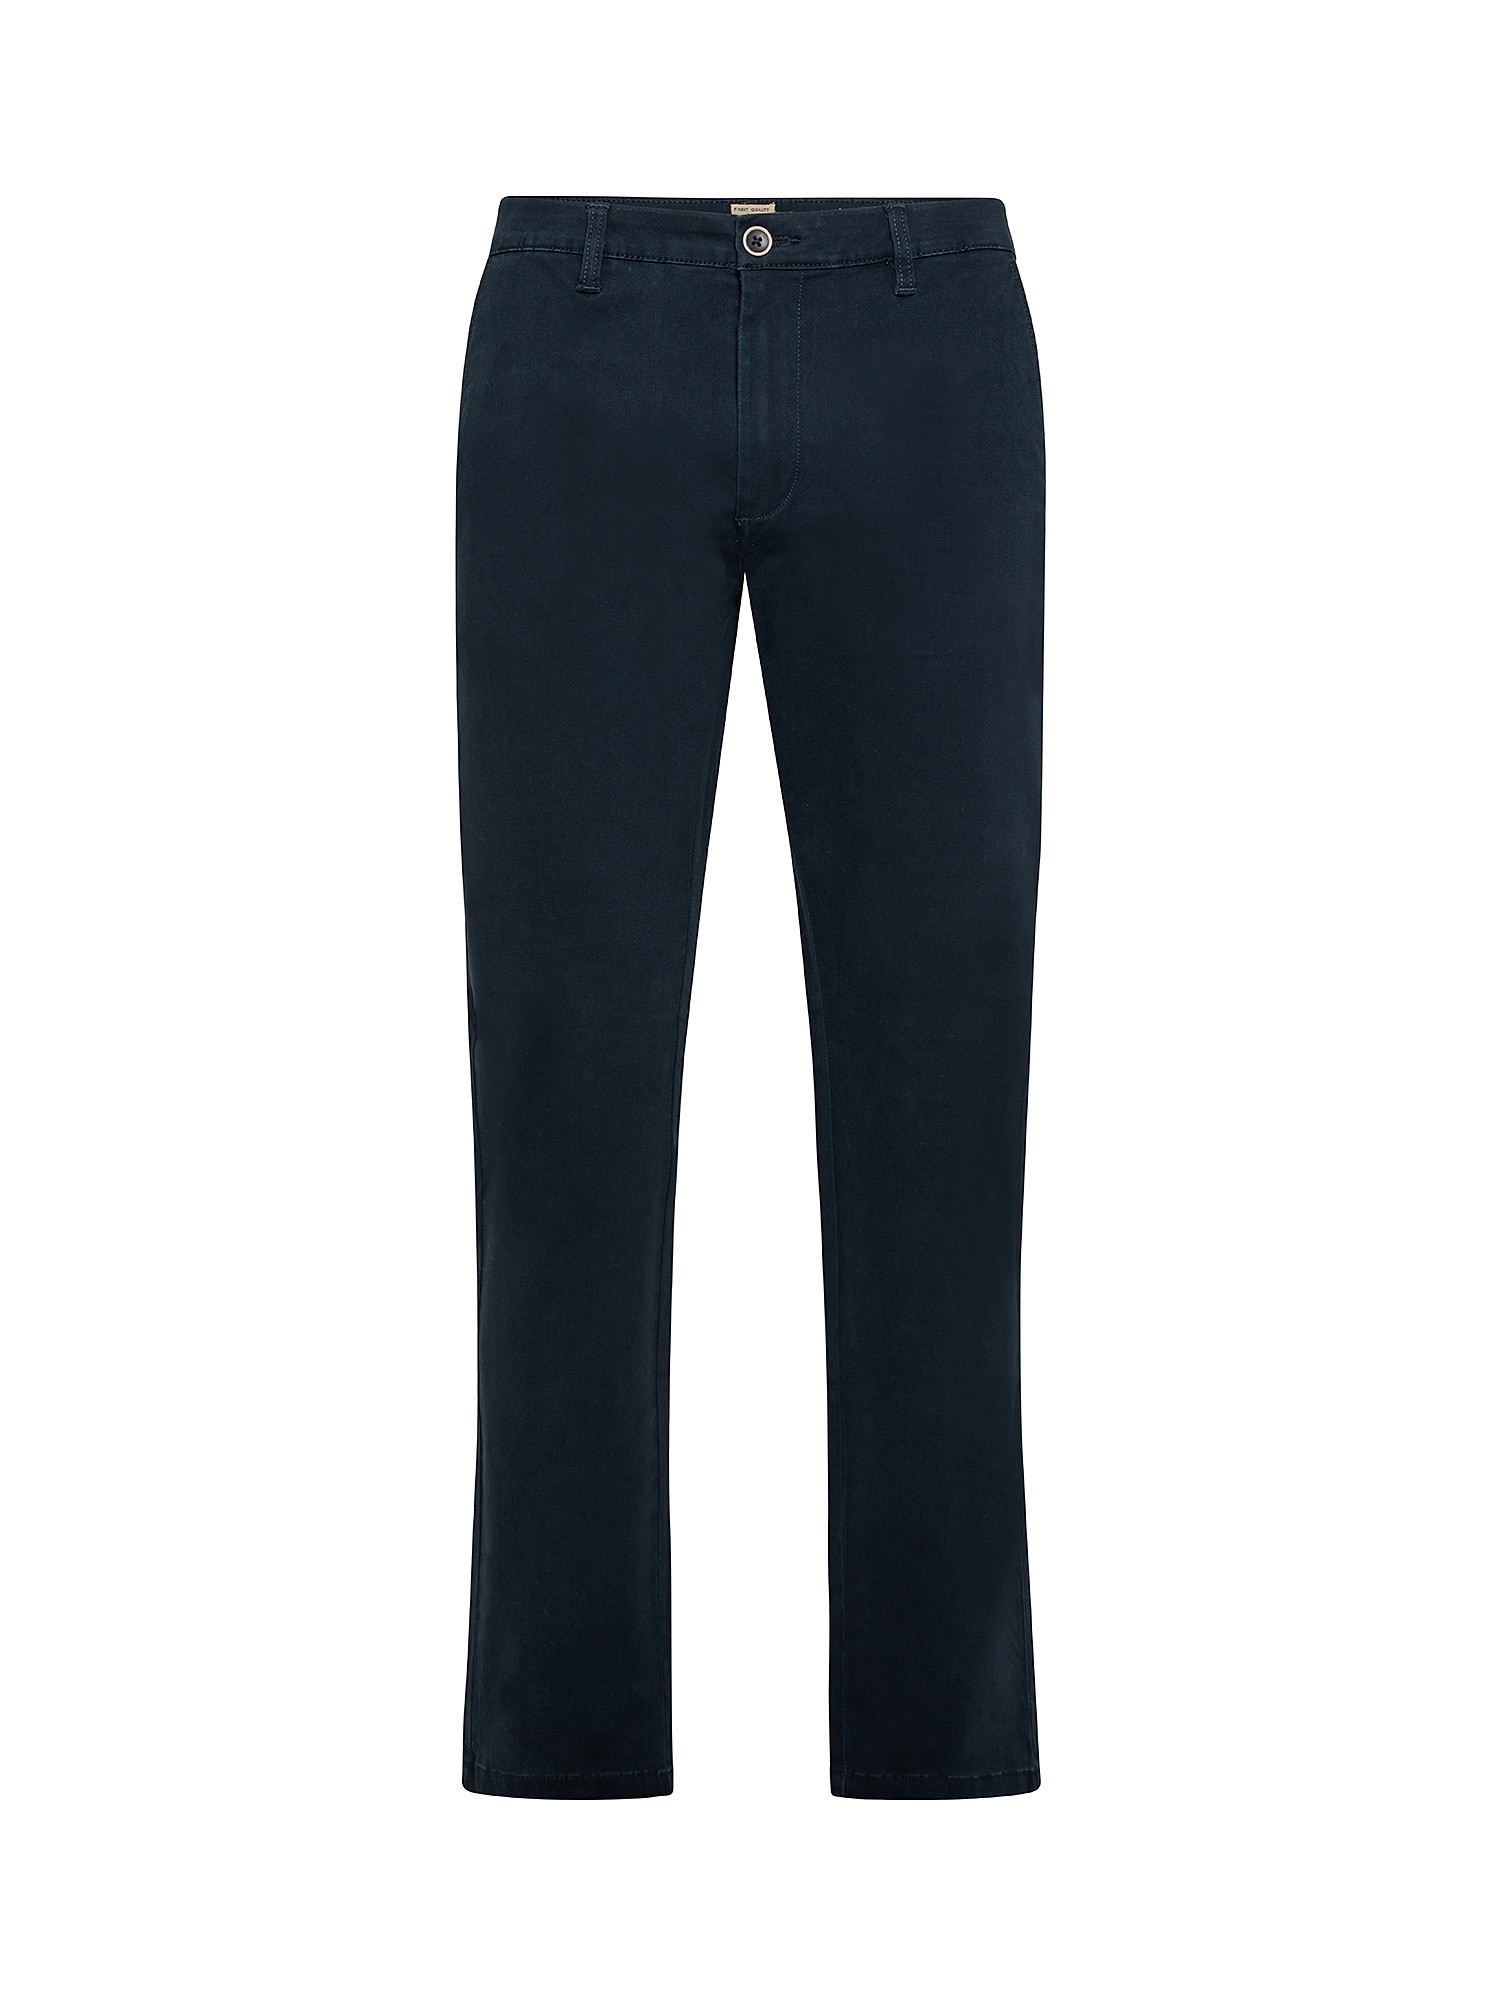 Pantalone slim comfort fit in cotone elasticizzato, Blu scuro, large image number 0